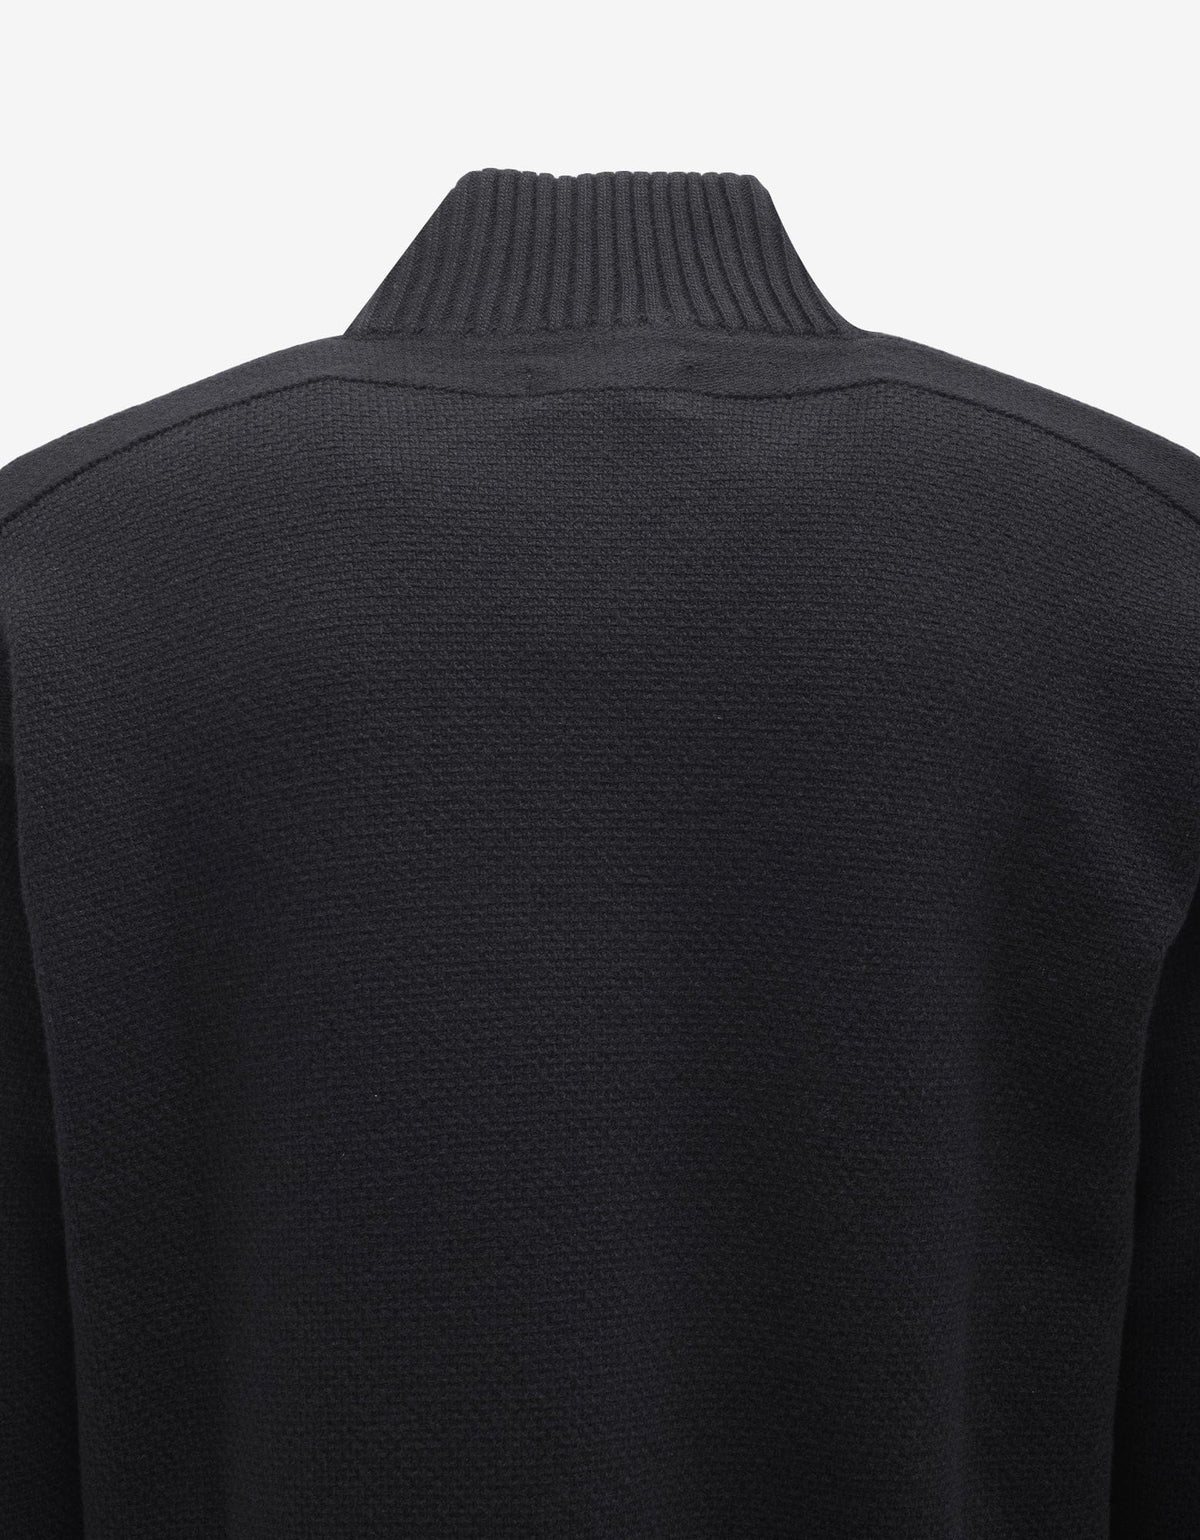 Stone Island Shadow Project Black Roll-neck Sweater